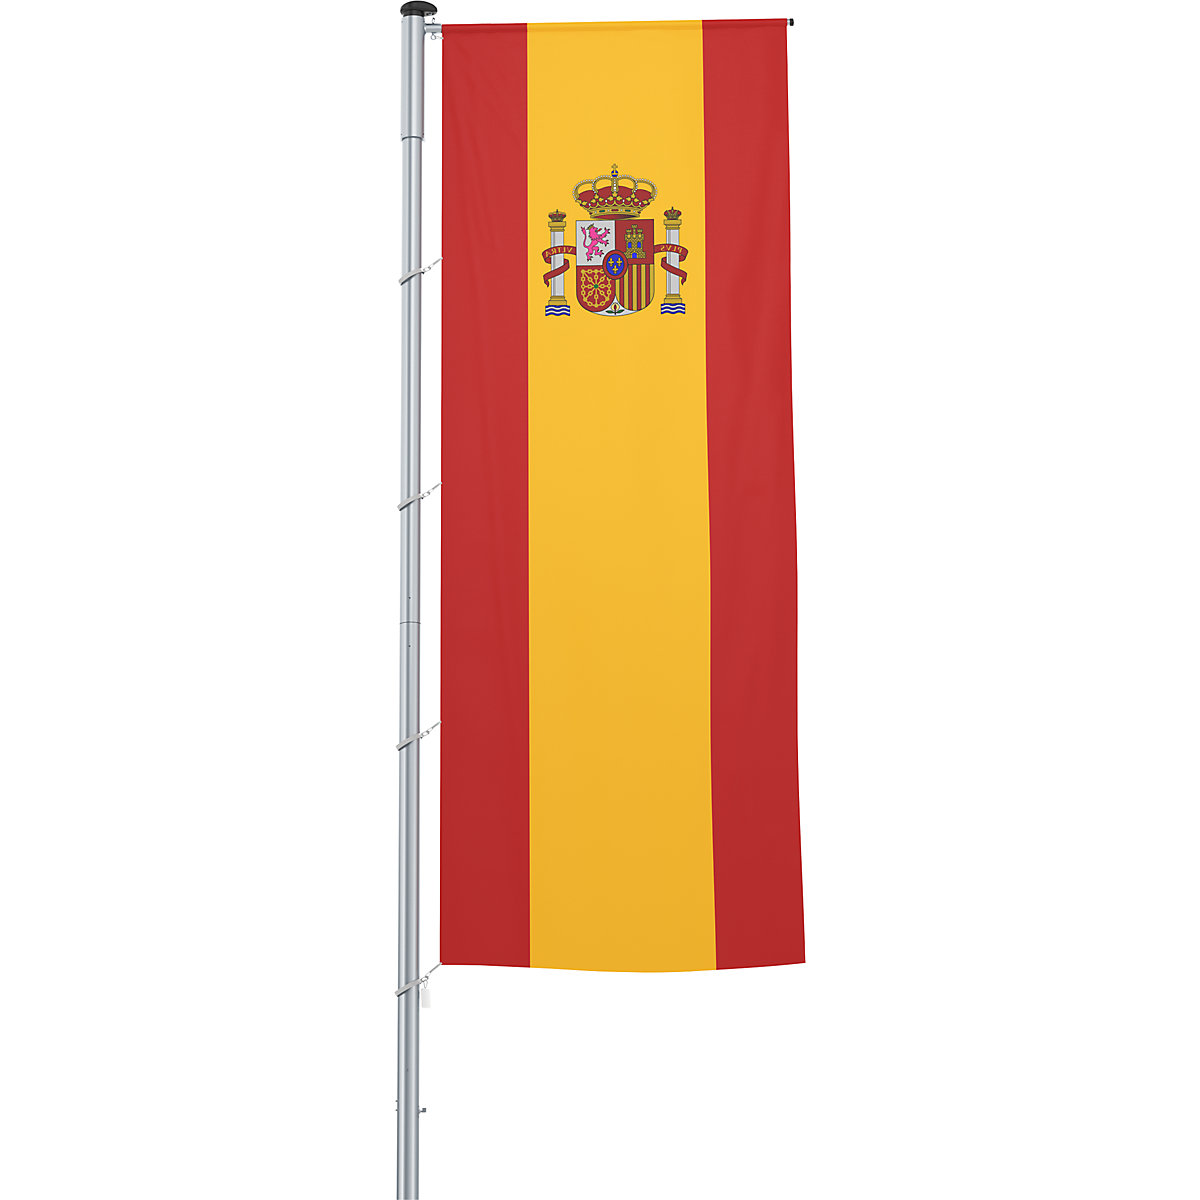 Steag pentru braț/drapel național – Mannus, format 1,2 x 3 m, Spania-17